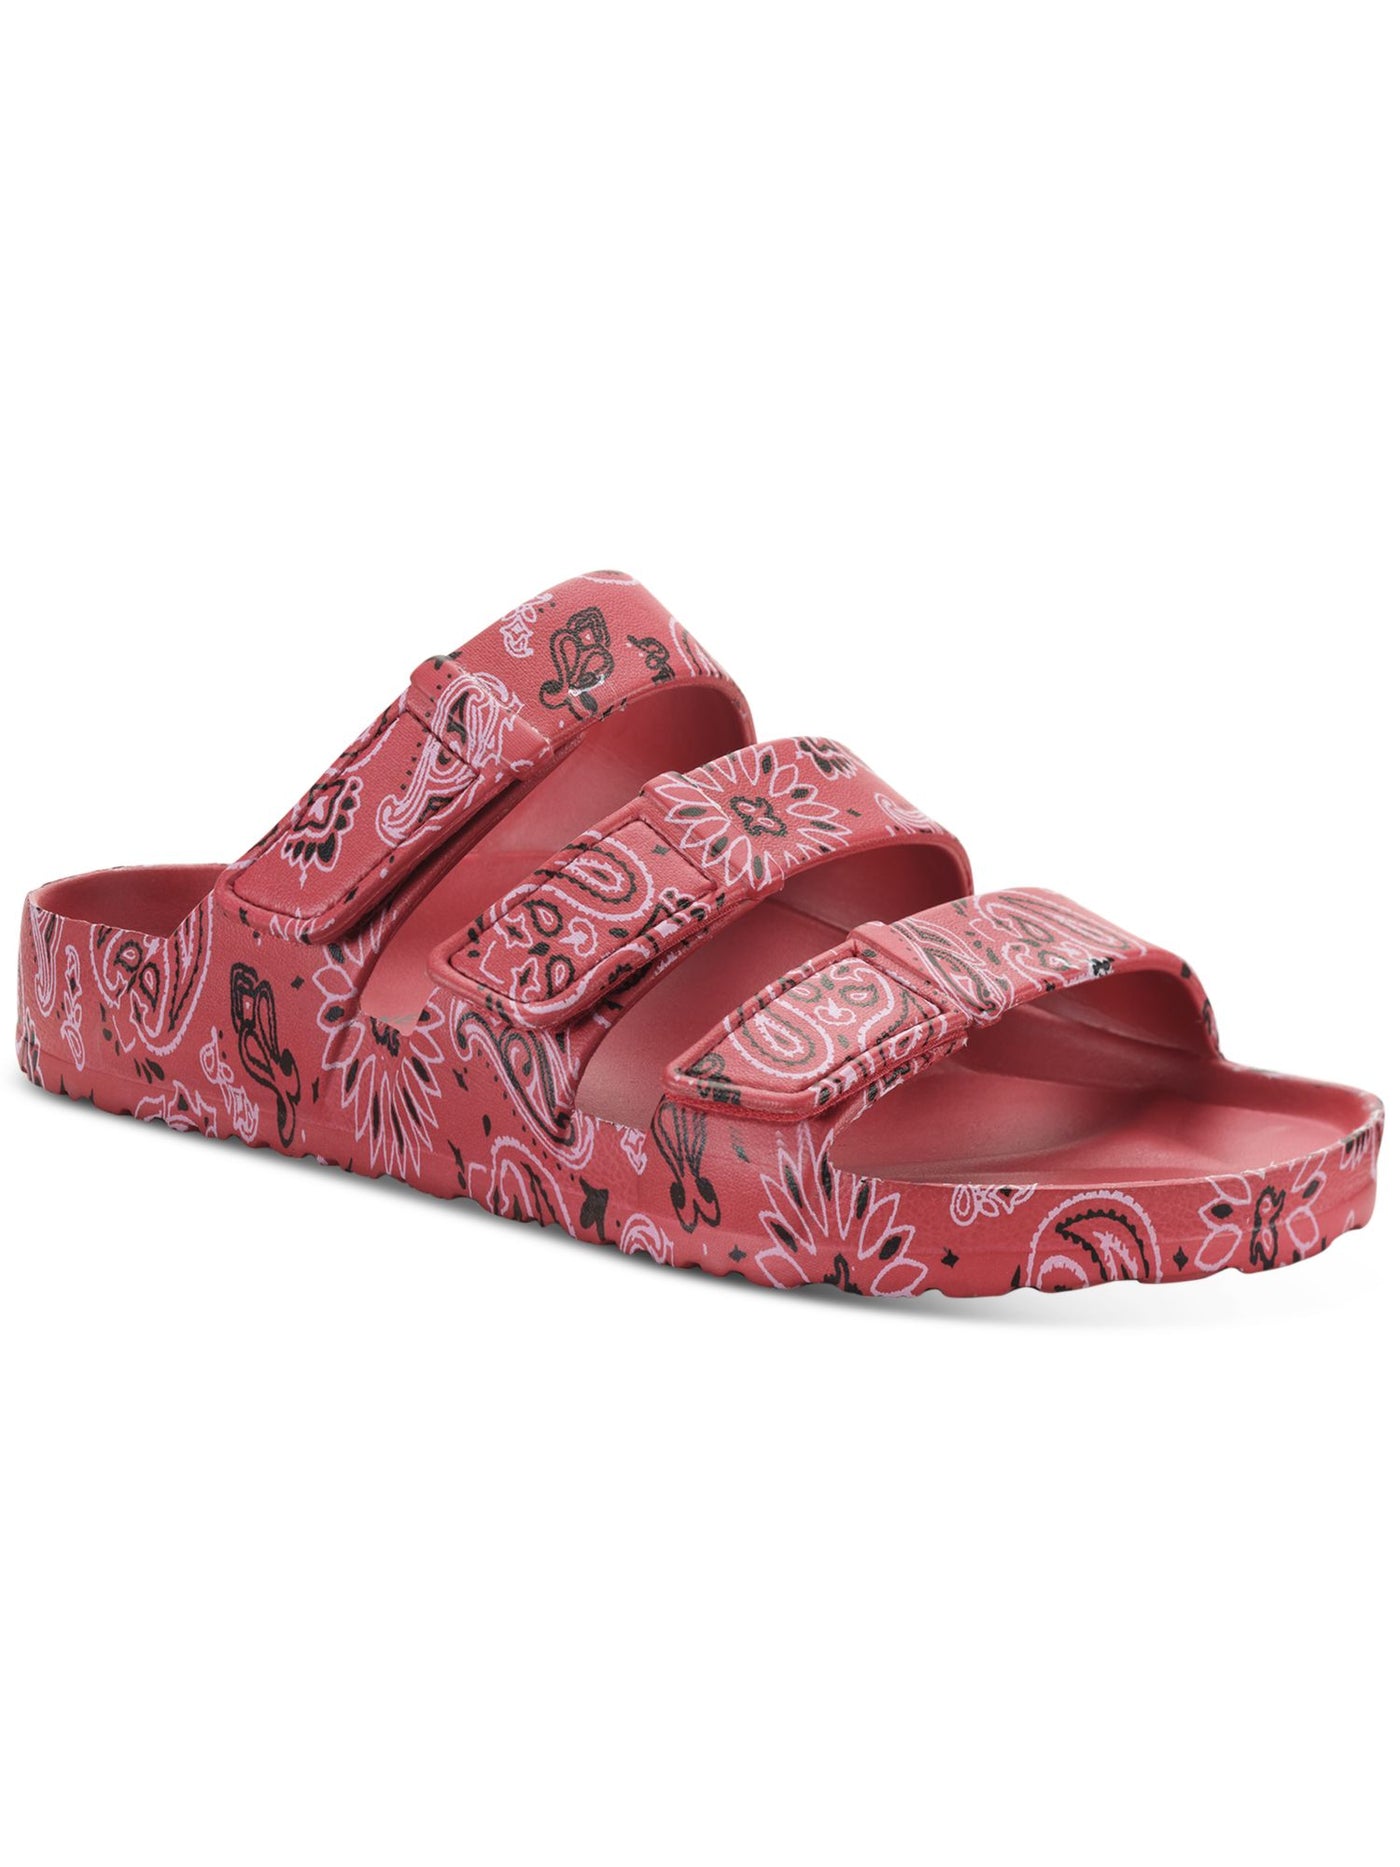 SUN STONE Mens Red Paisley Stay-Put Straps Flexible Sole Adjustable Bowie Open Toe Platform Slip On Slide Sandals Shoes 8 M